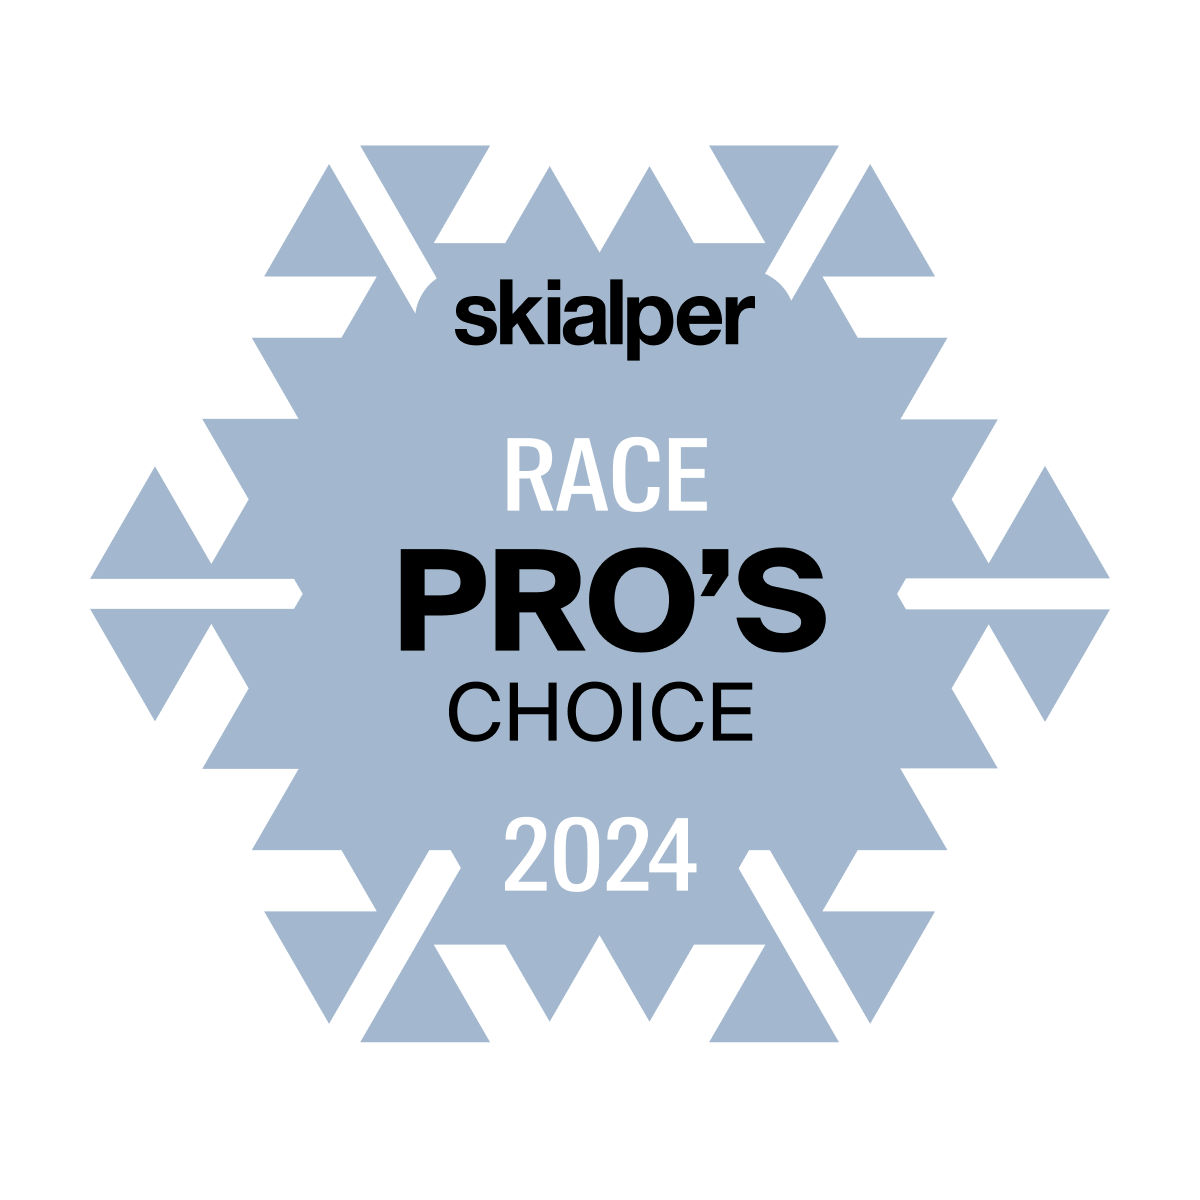 Pro's choice Race